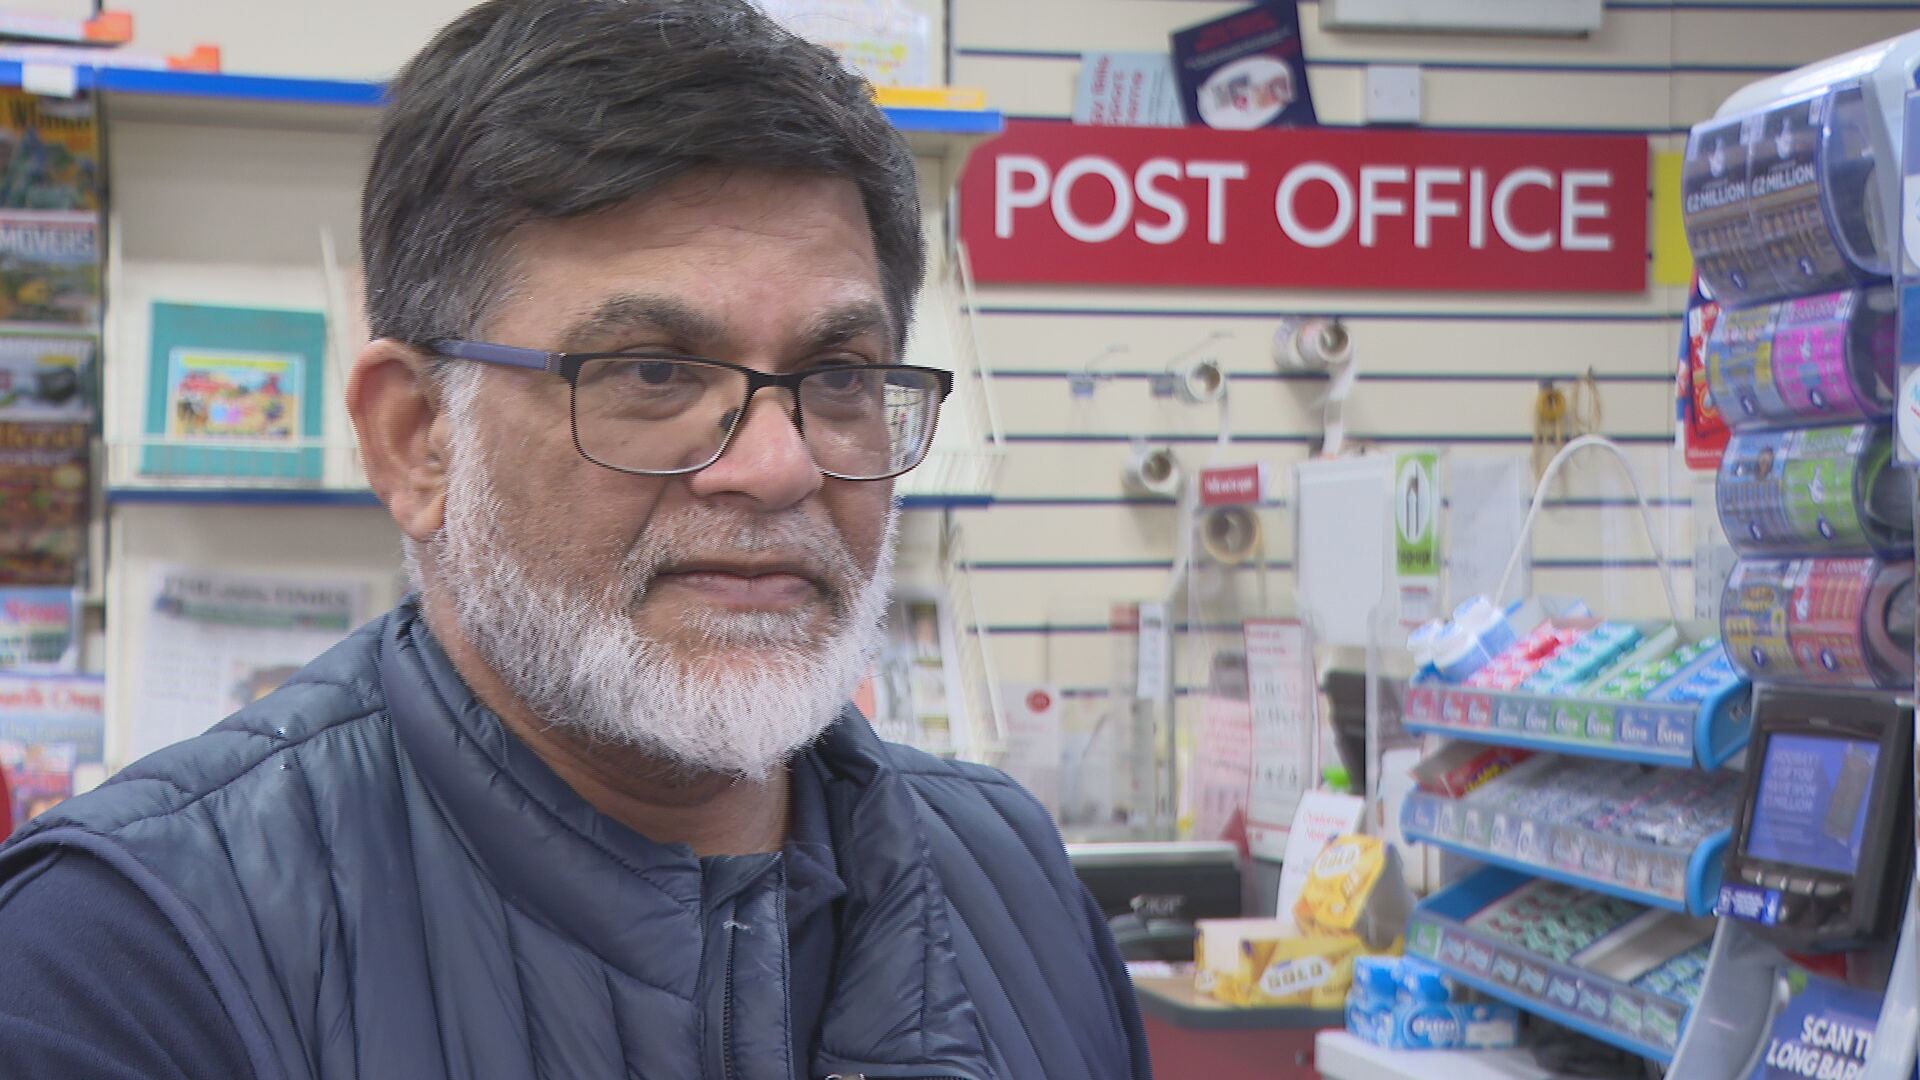 Postmaster Nadeem Rabbani has been left shaken by the incident on Saturday.